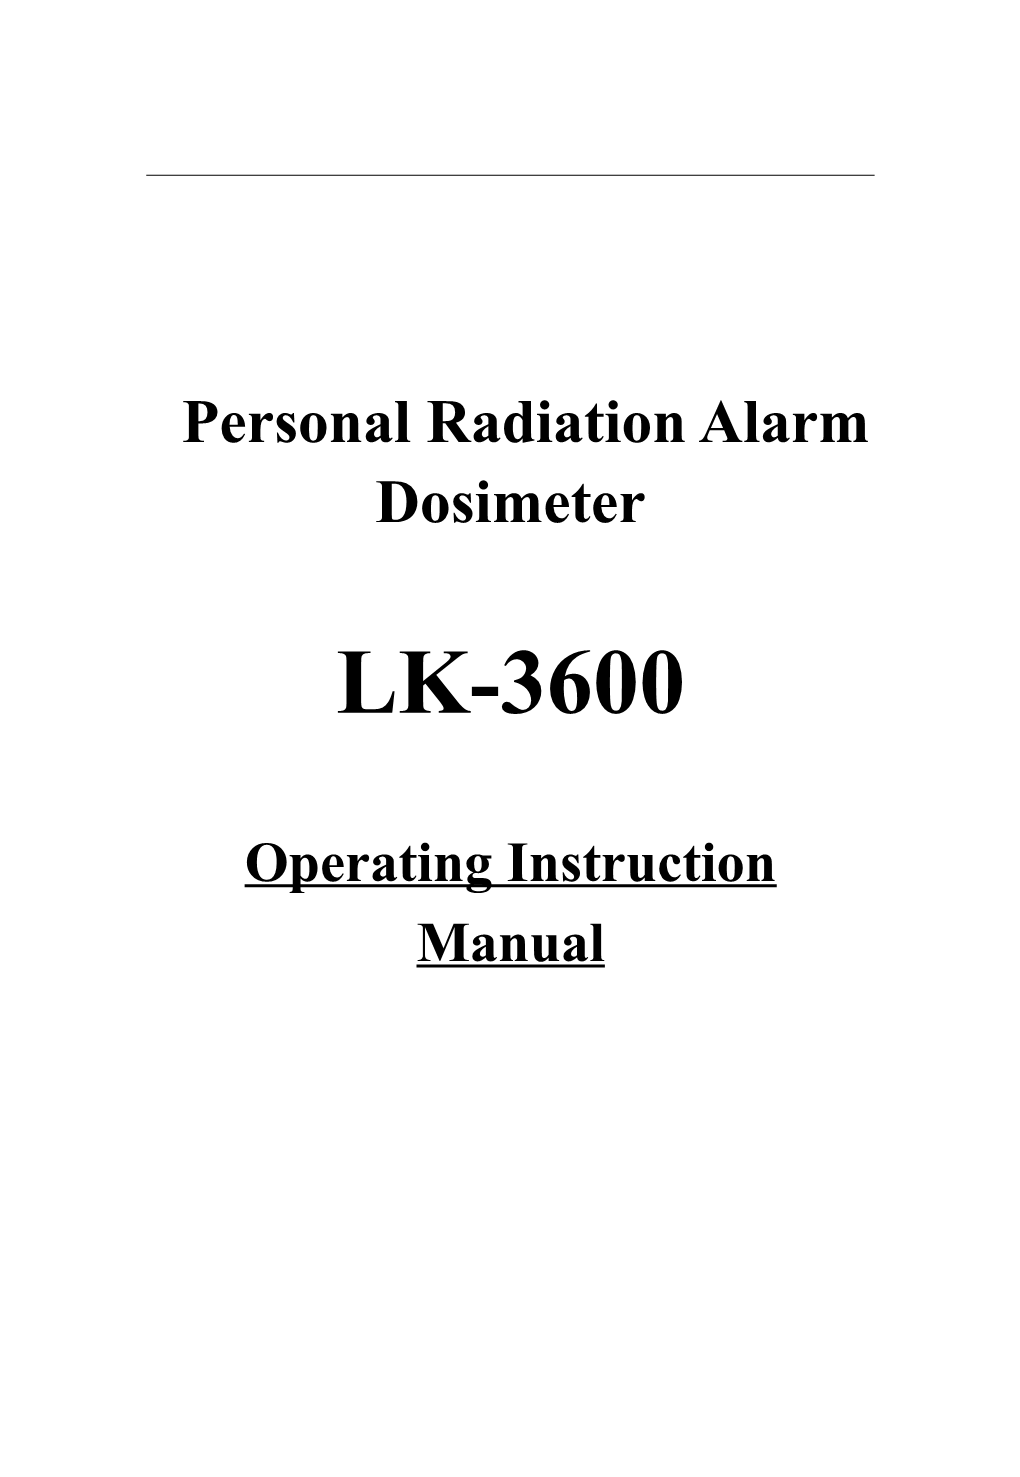 Personal Radiation Alarm Dosimeter